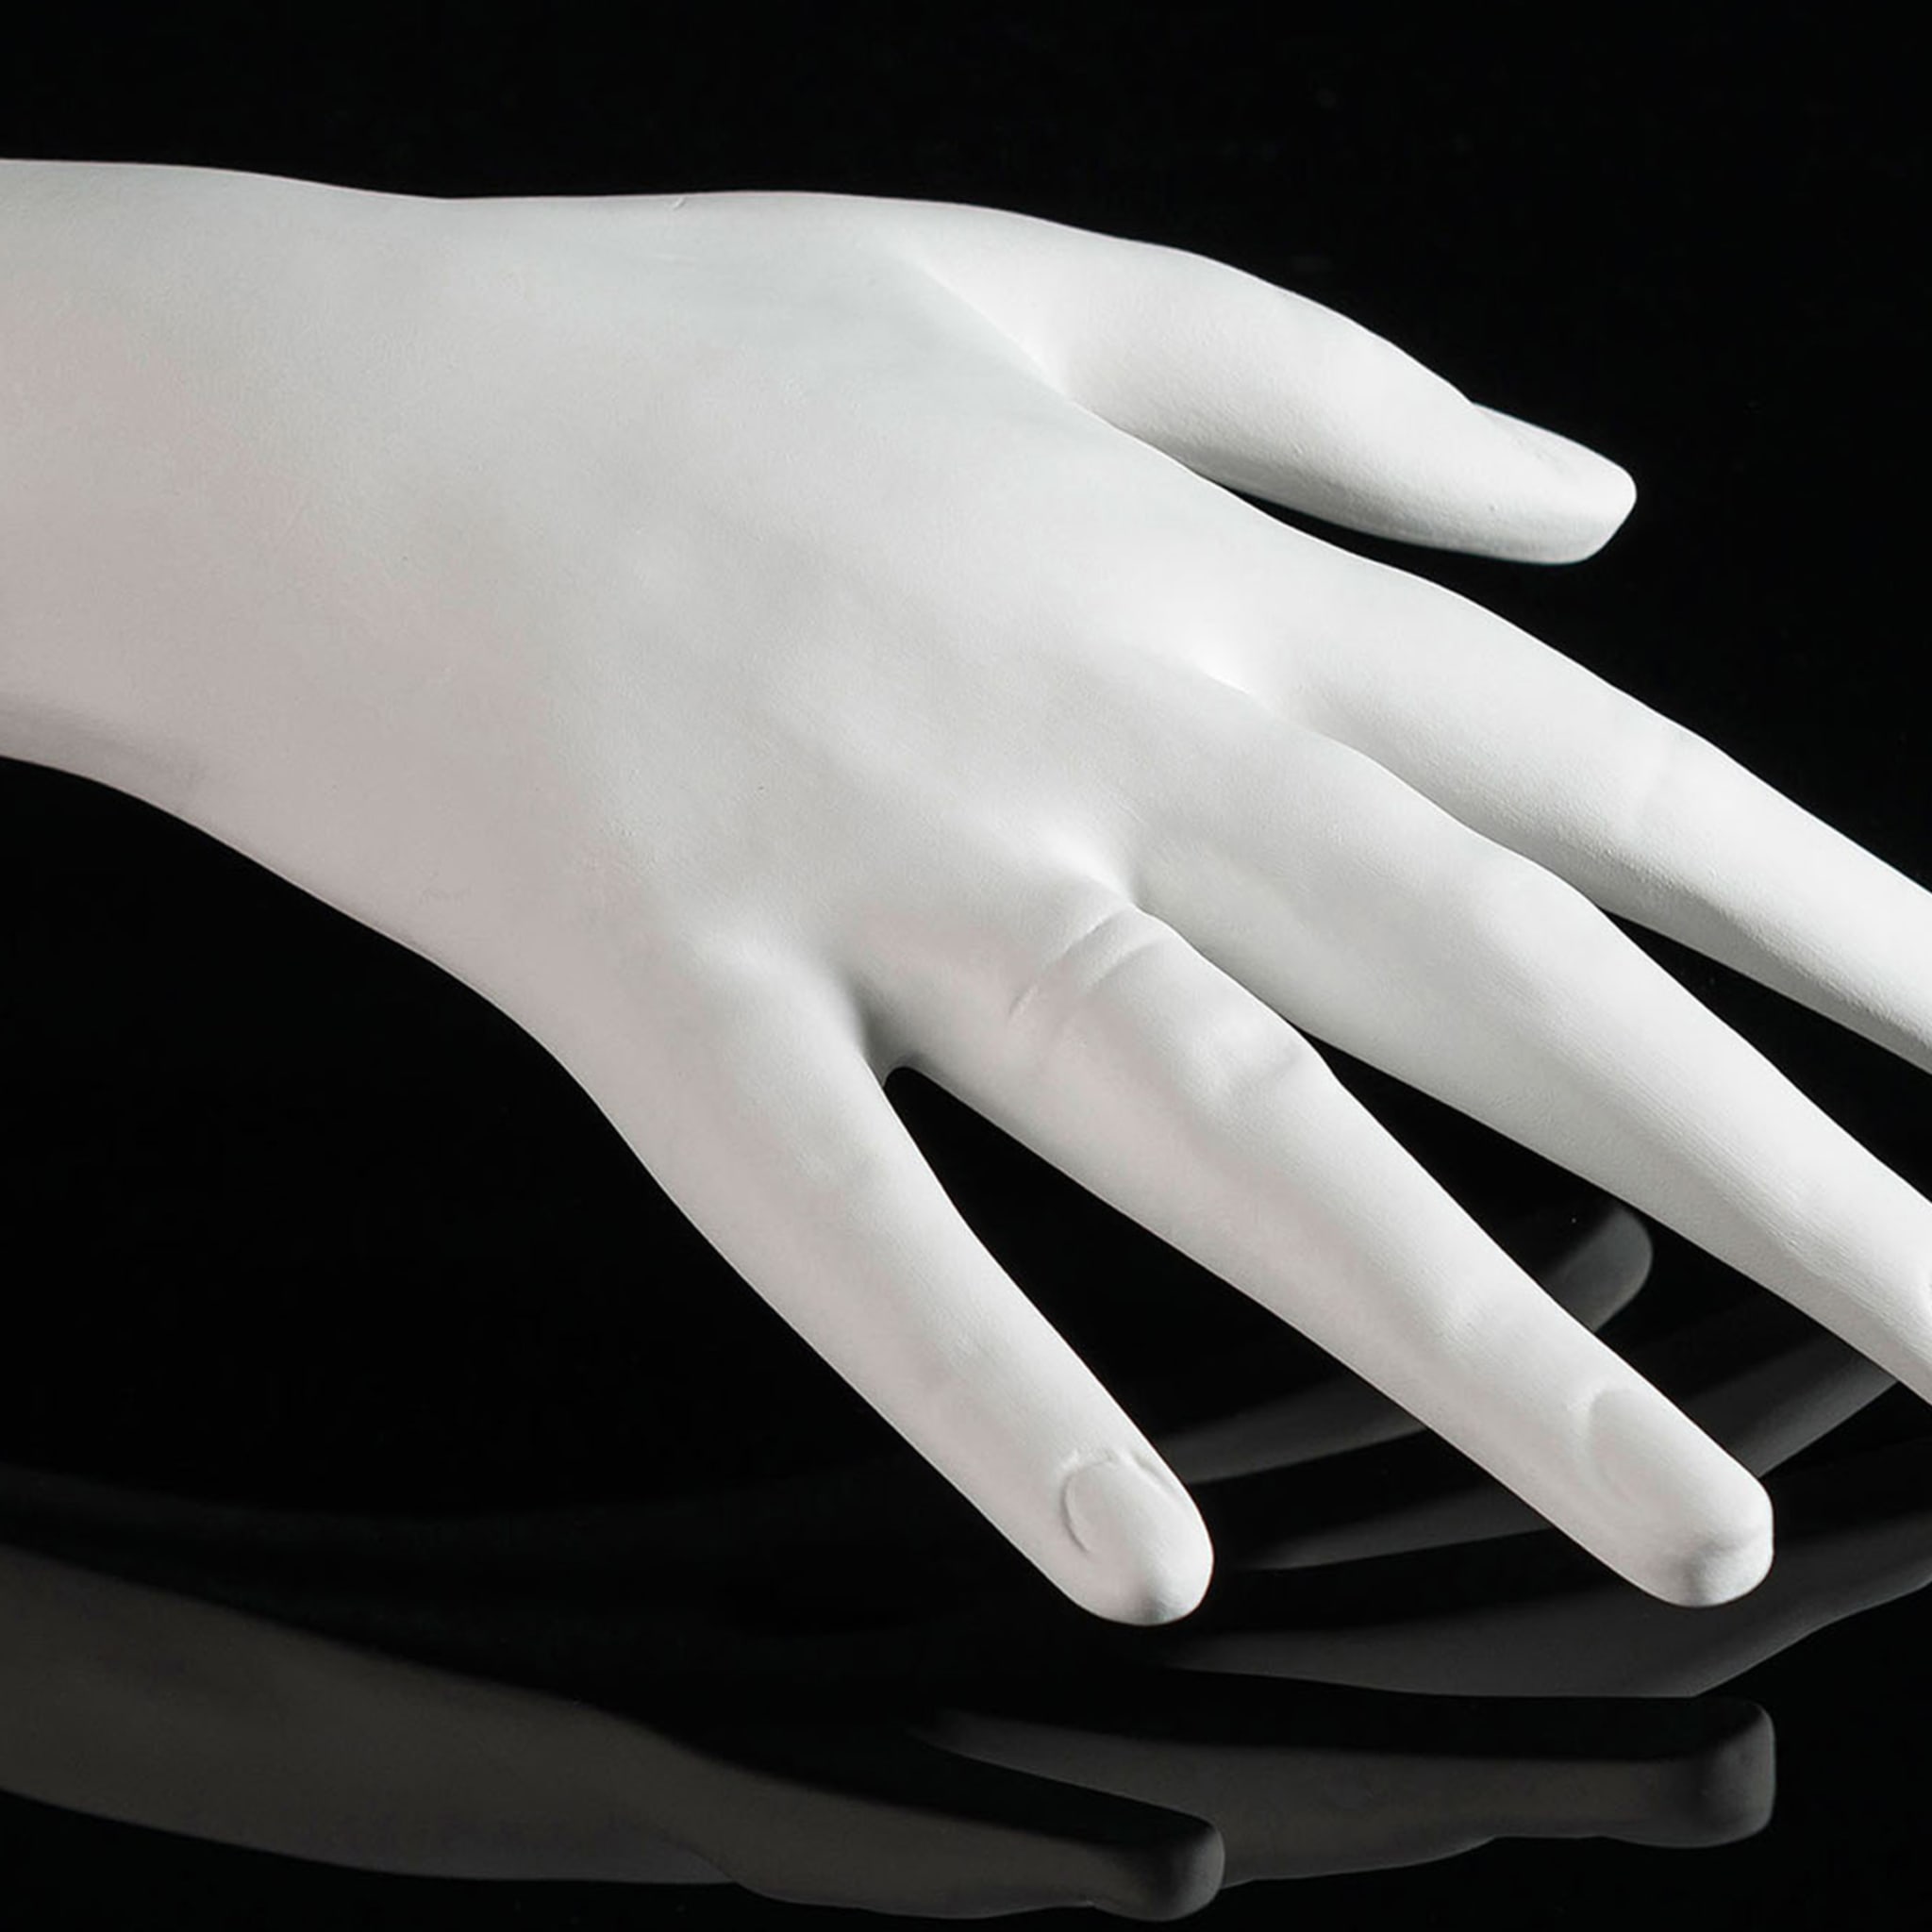 Mano Destra Hand-Shaped White Sculpture - Alternative view 1